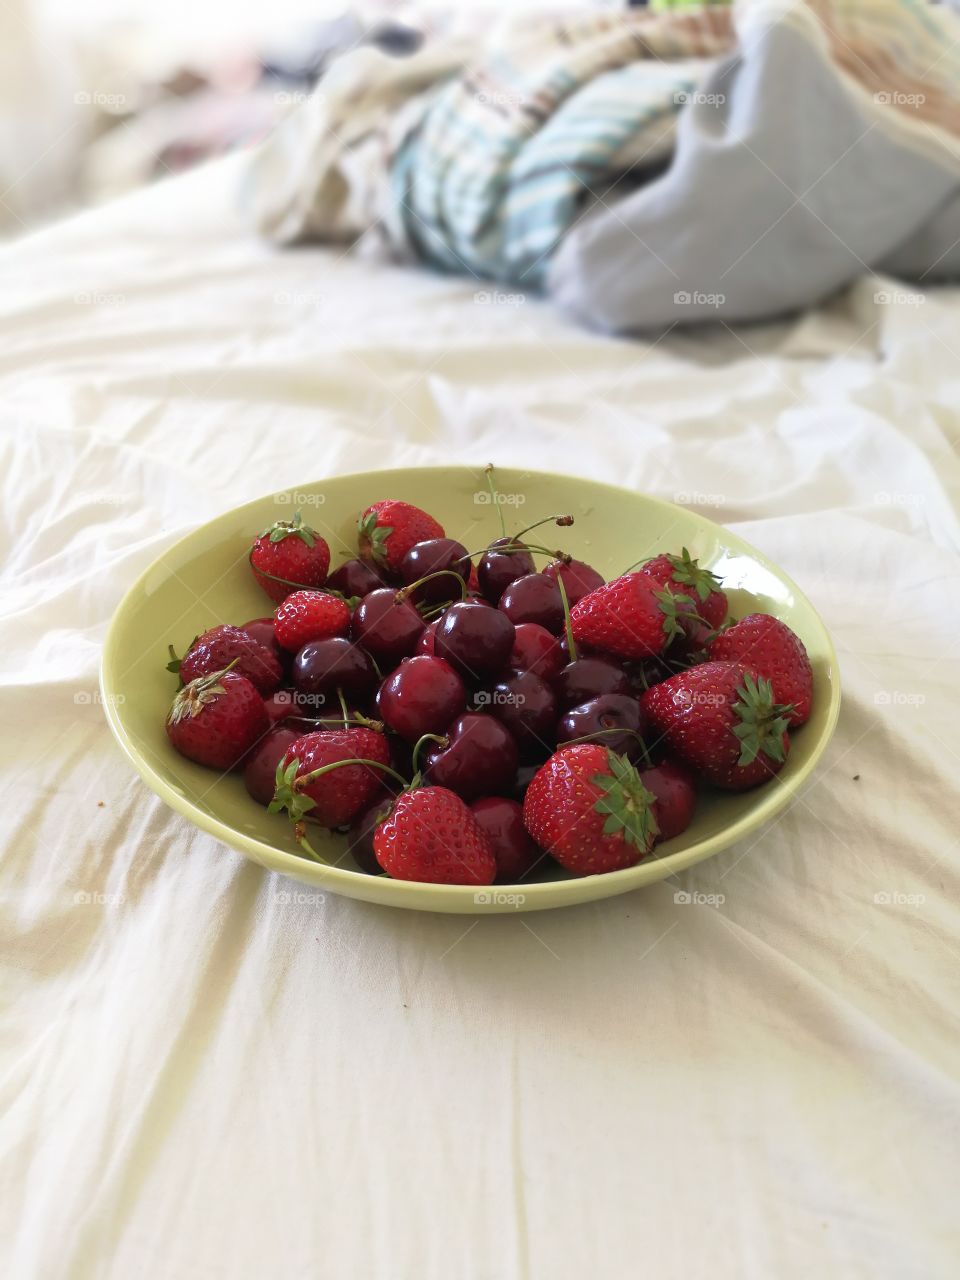 Morning fruits